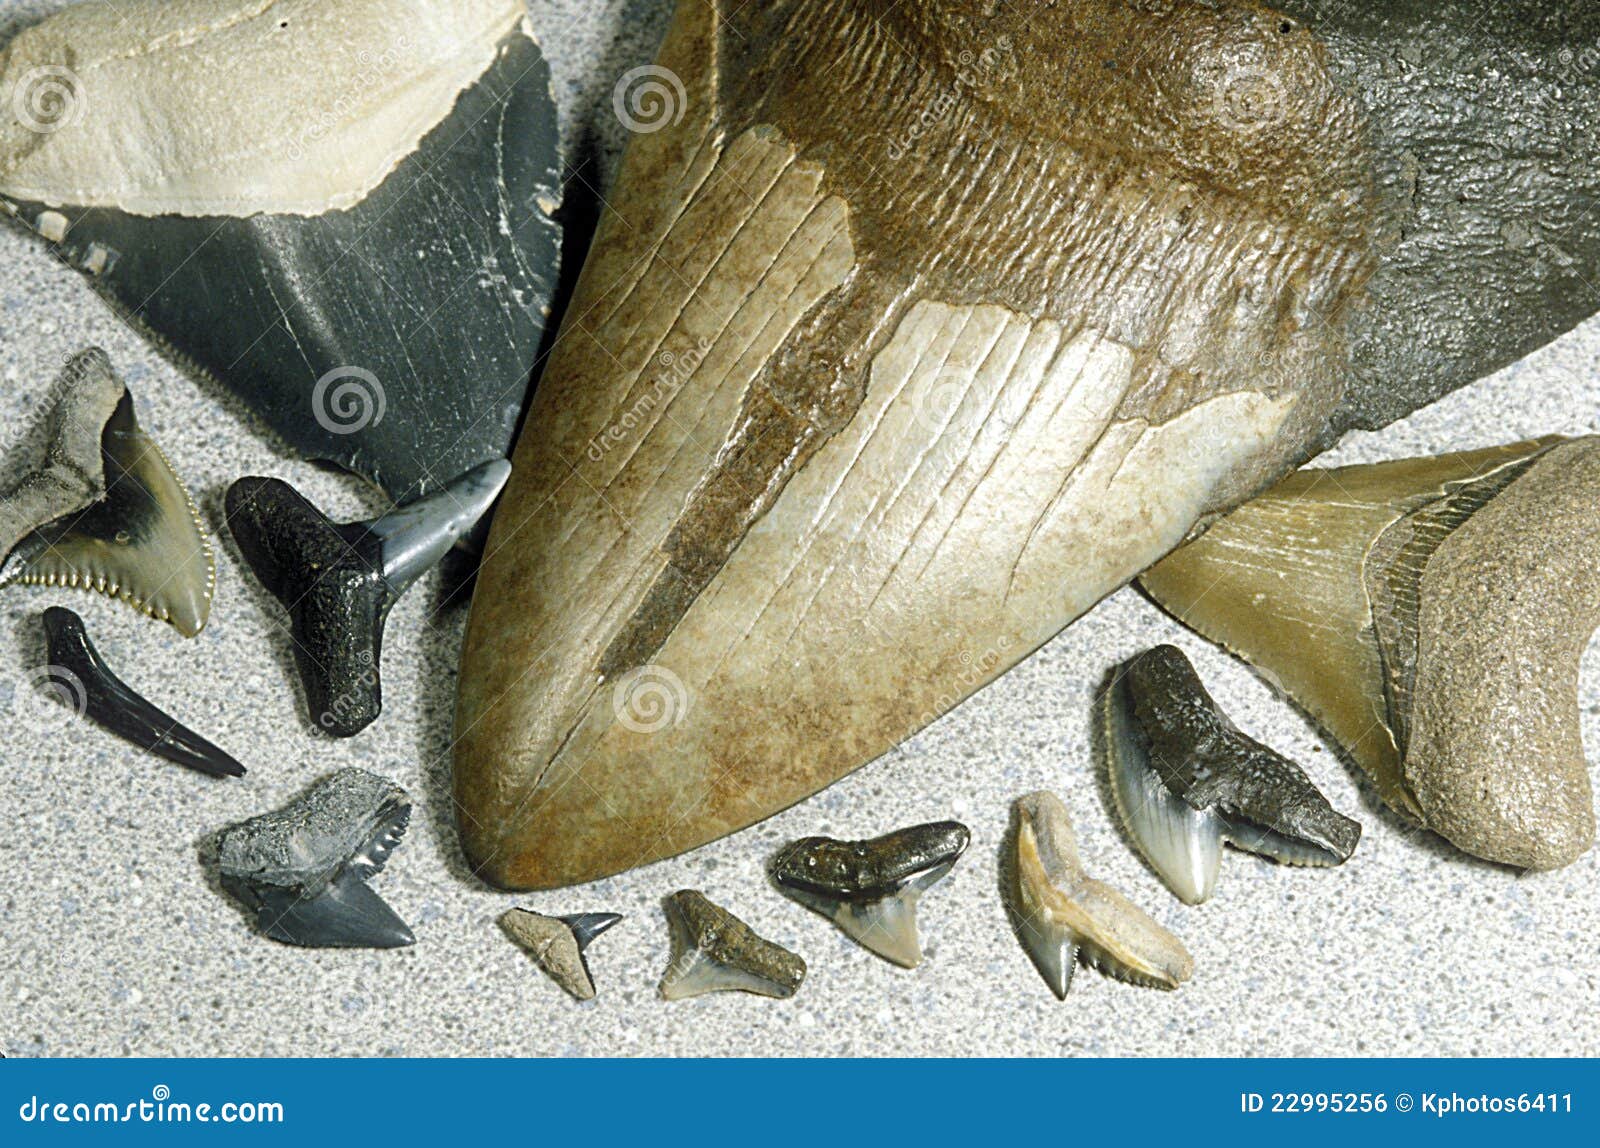 fossilized shark teeth